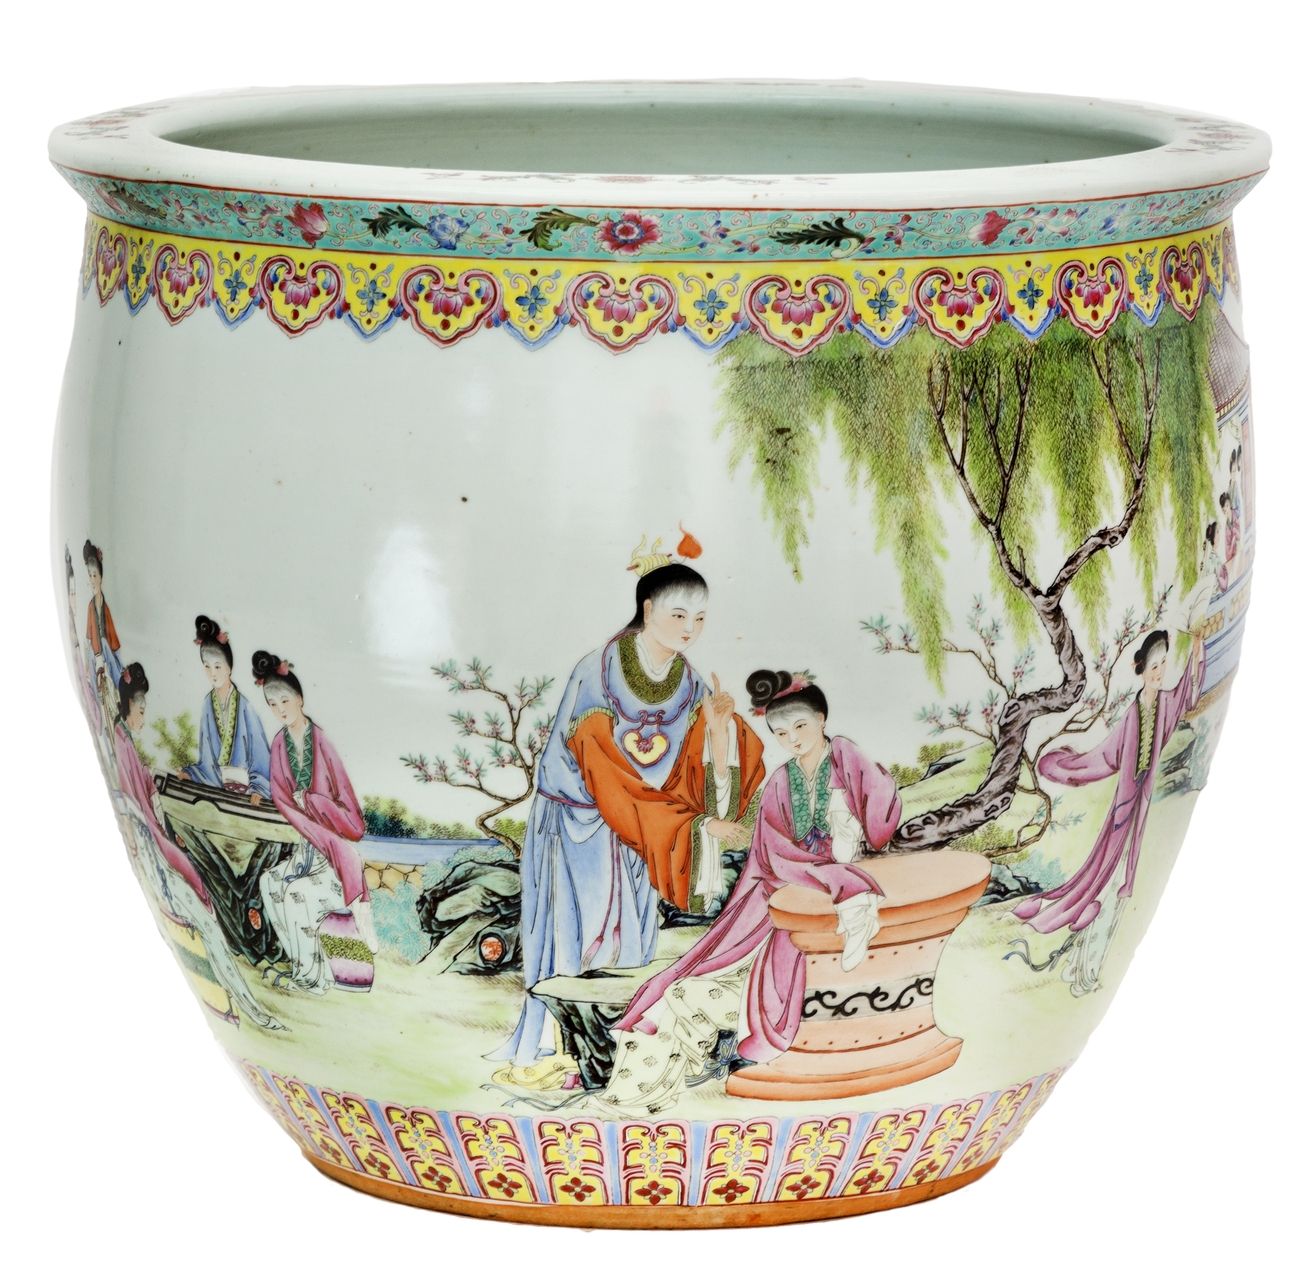 Null 中国，民国时期(1912-1949)
瓷器贮藏罐，法米勒珐琅彩装饰花圃中的宫女。
高度：31厘米。 直径：37厘米